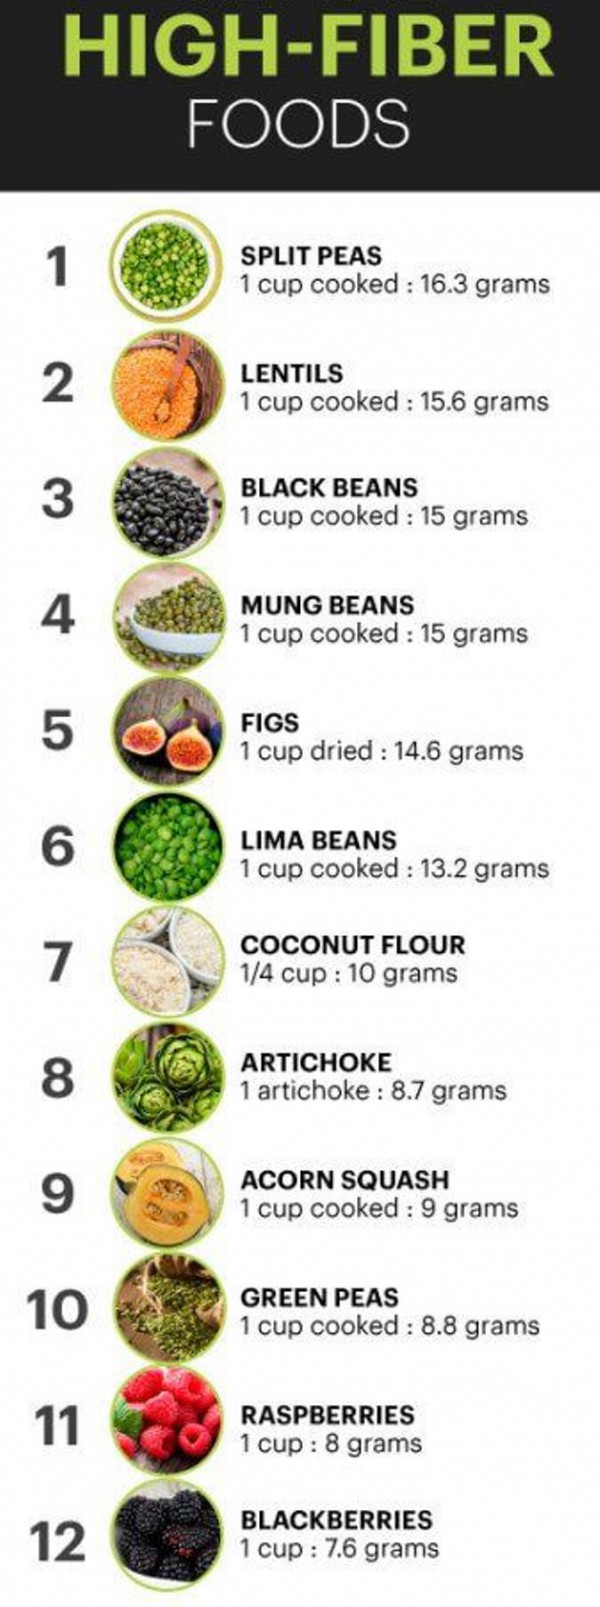 Top 12 High-fiber foods